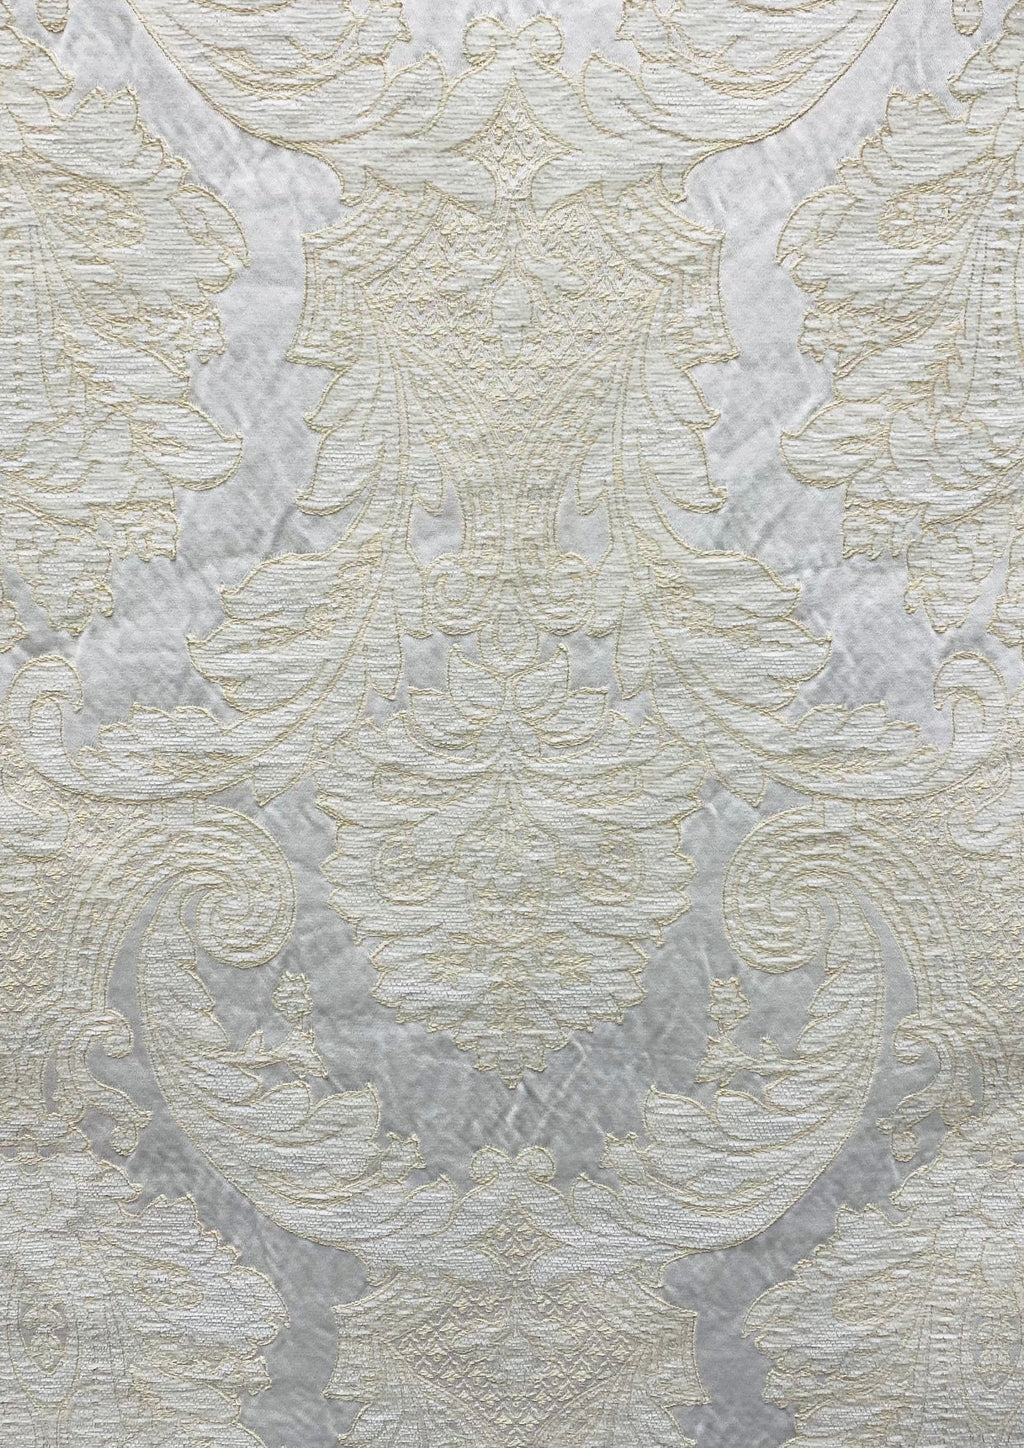 NEW Lady Daniella Designer Medallion Burnout Chenille Velvet Fabric - Brocade- White Cream Gold